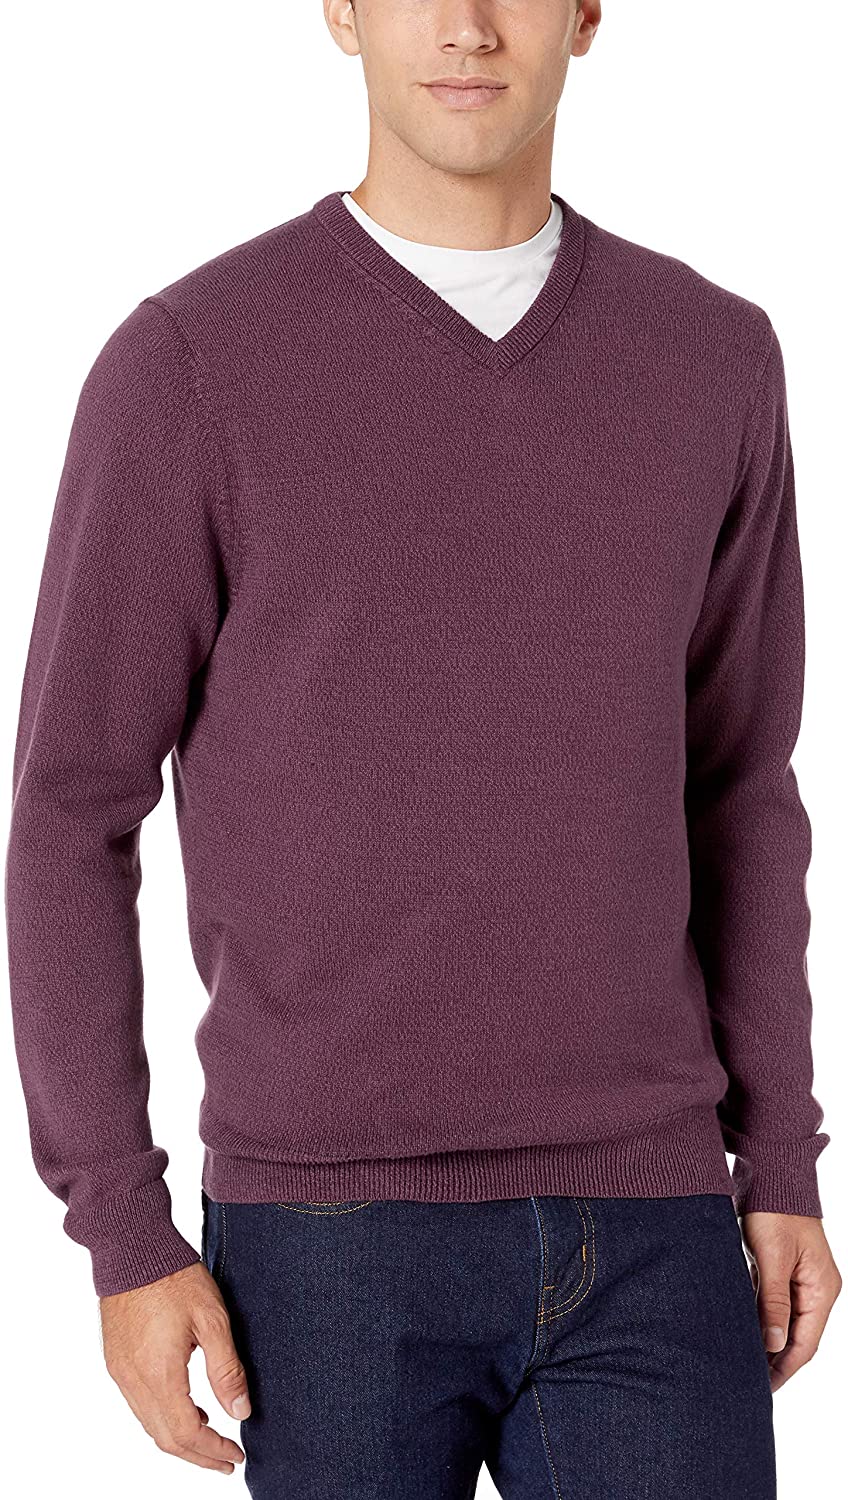 Essentials Men's V-Neck Sweater, Burgundy Marled, Size XX-Large GnWe | eBay